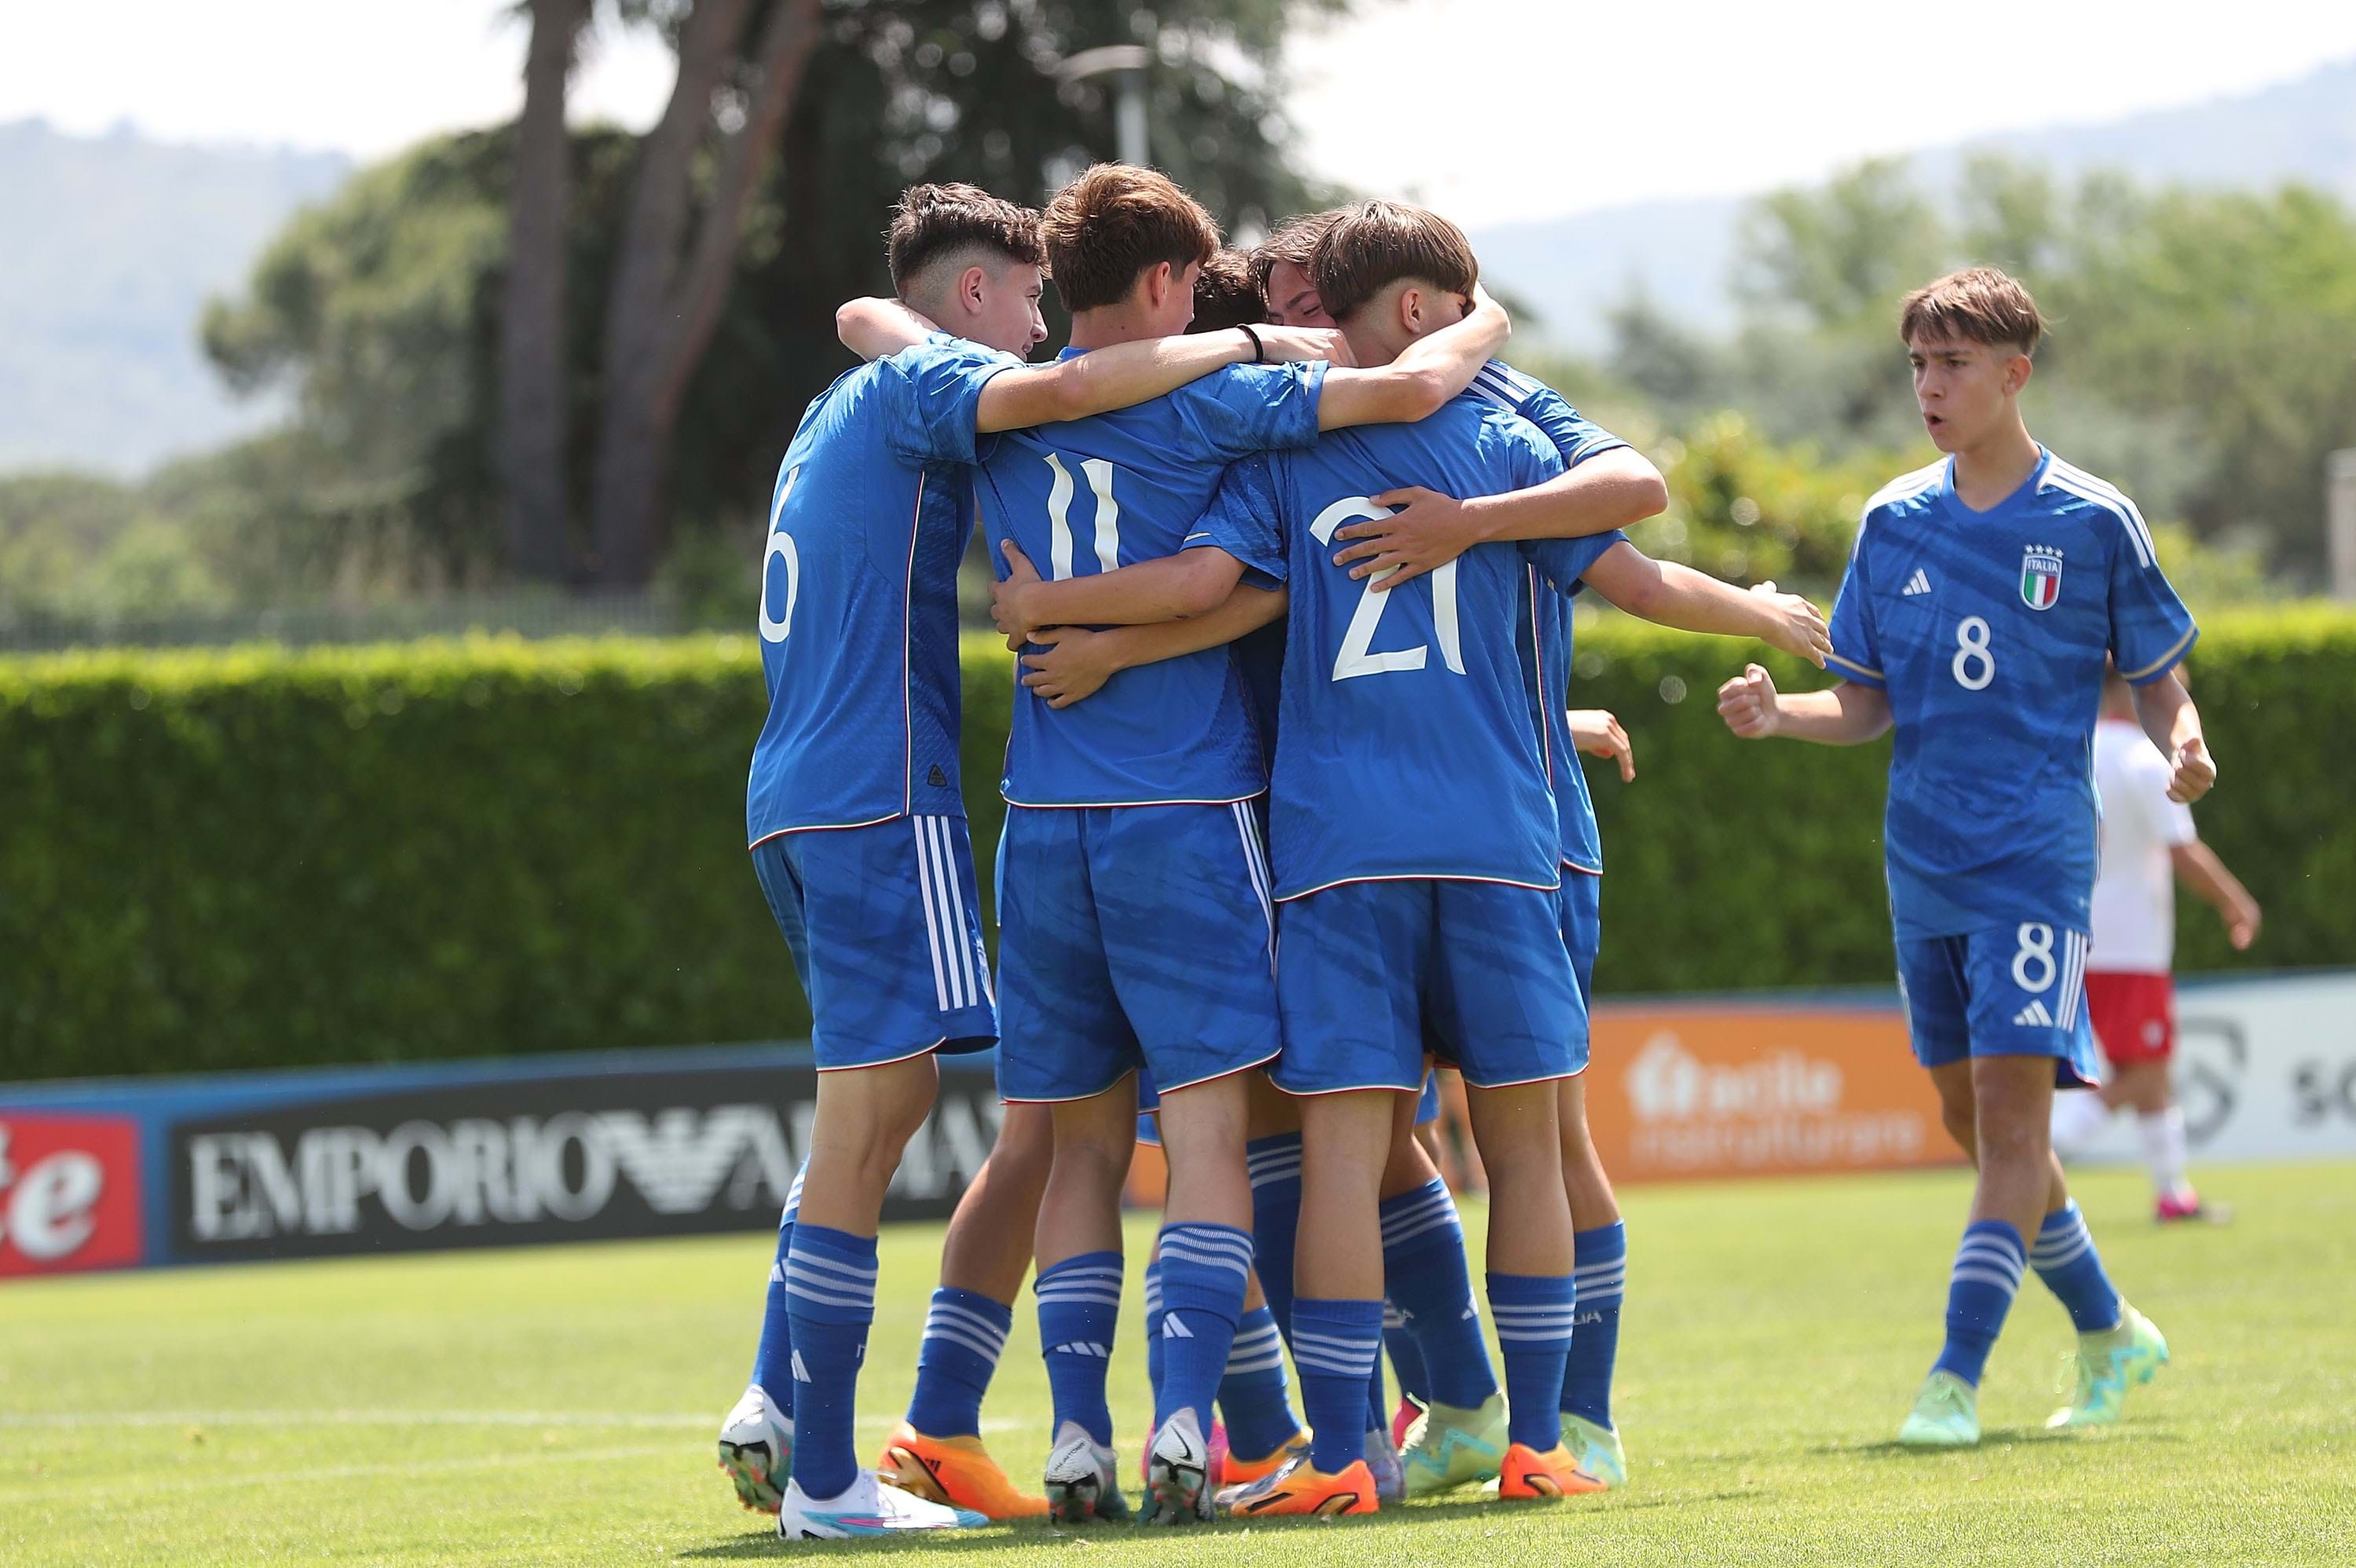 Highlights Under 15: Italia-Polonia 3-1